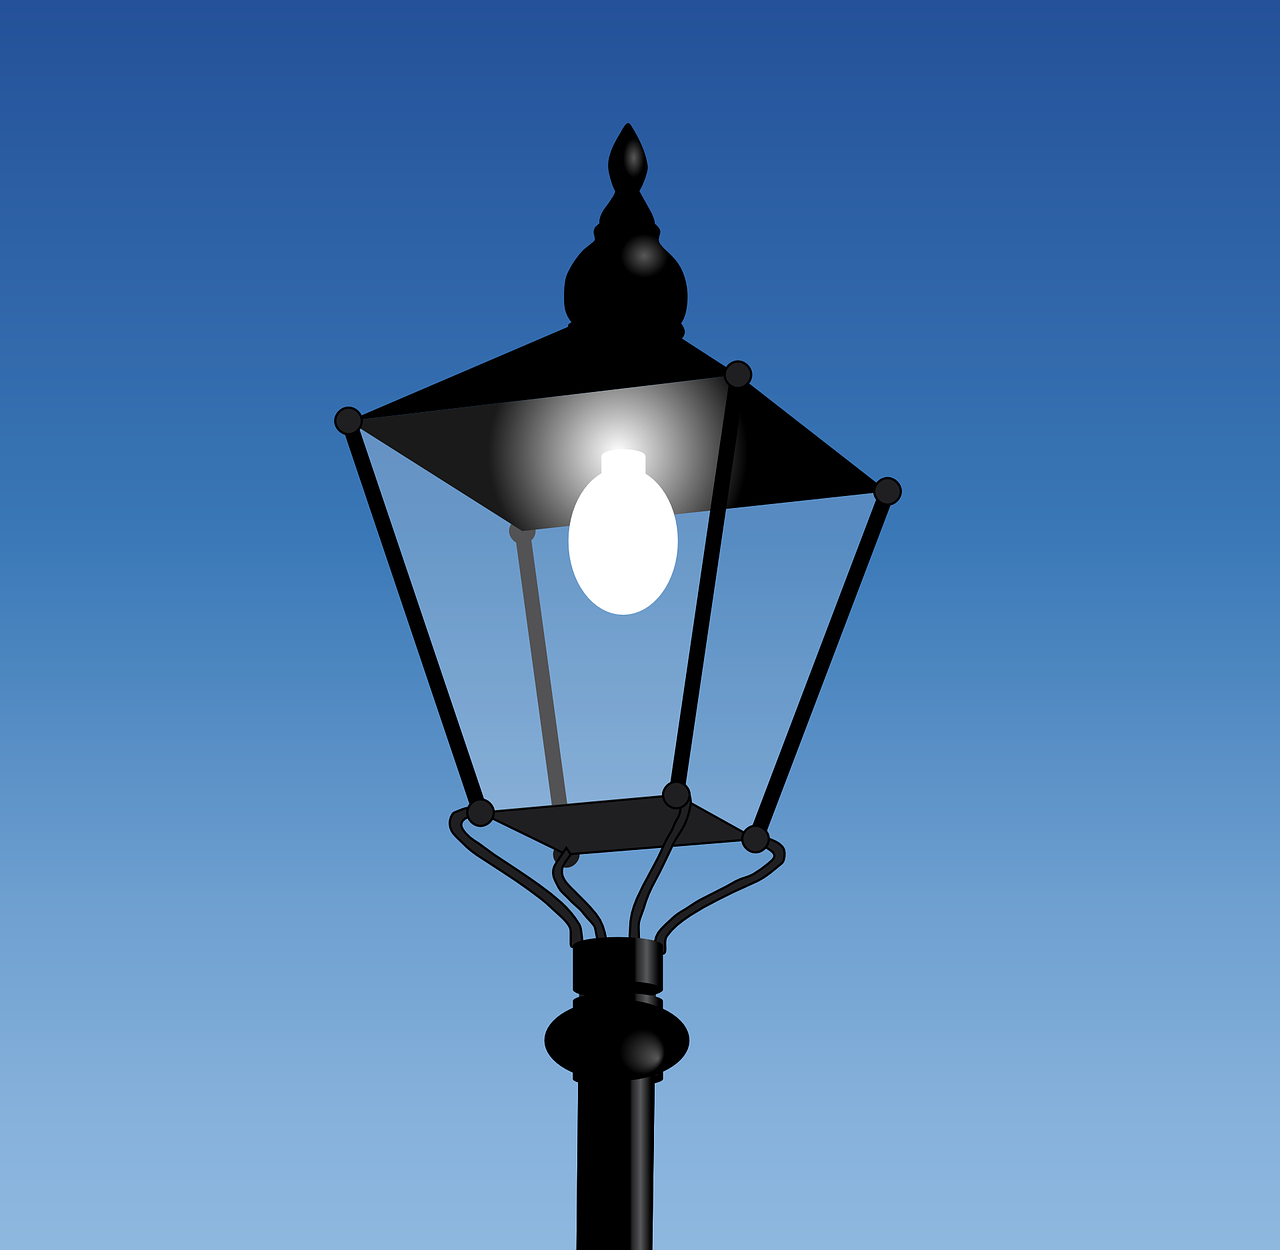 street lamp, street light, lamp